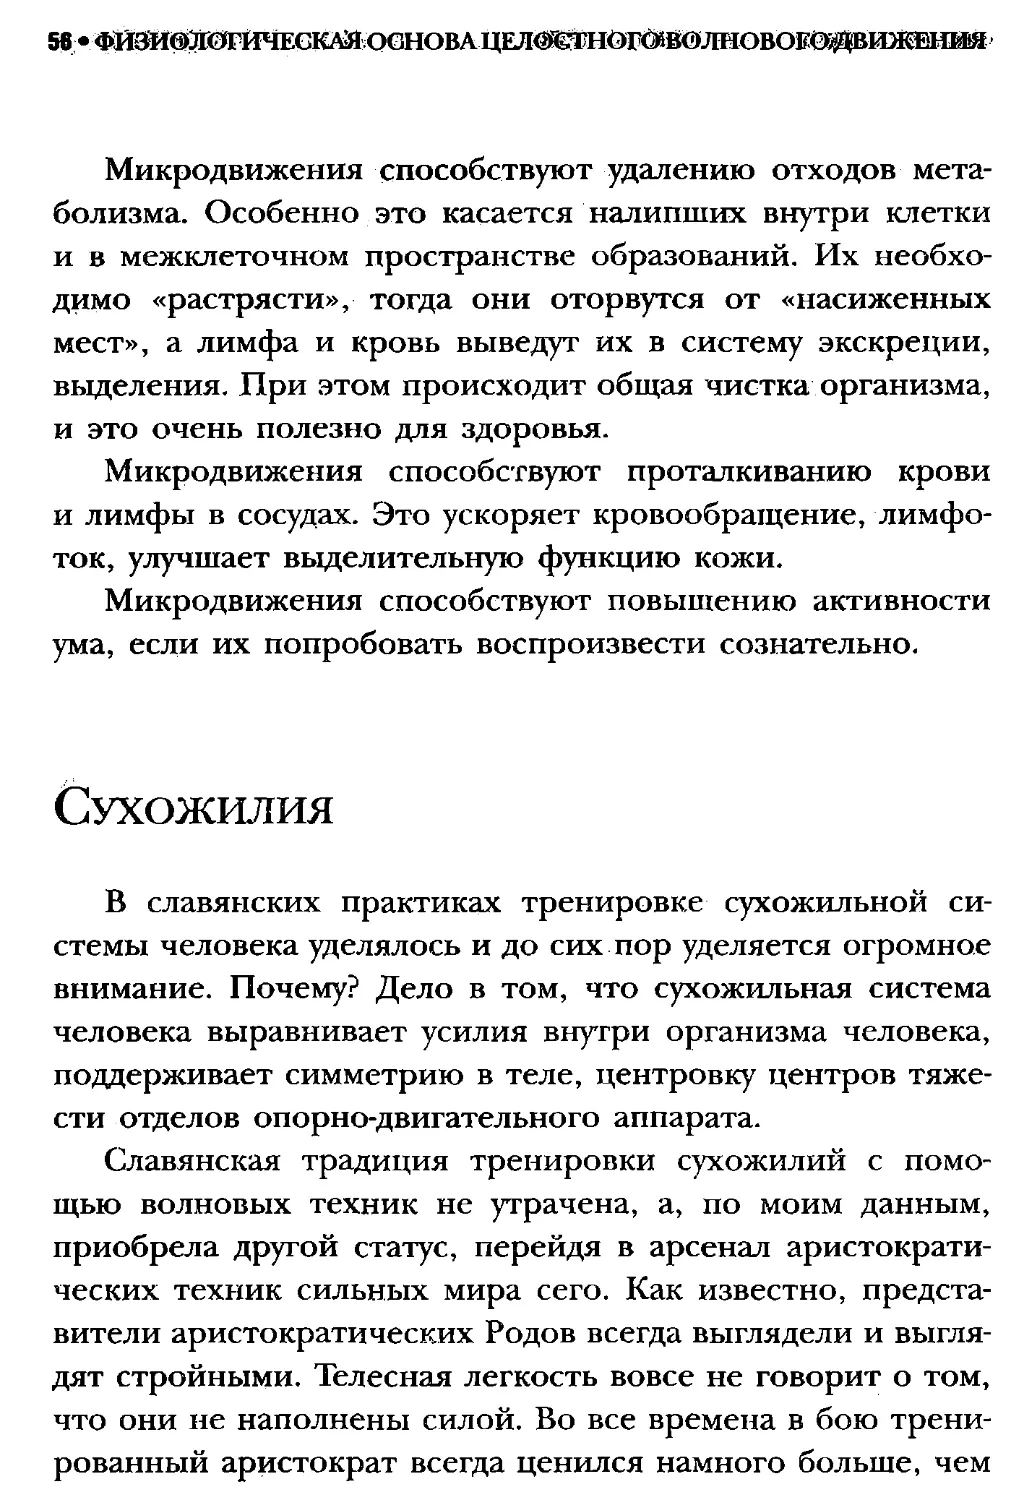 ﻿СлавянеТекст_page0028_1